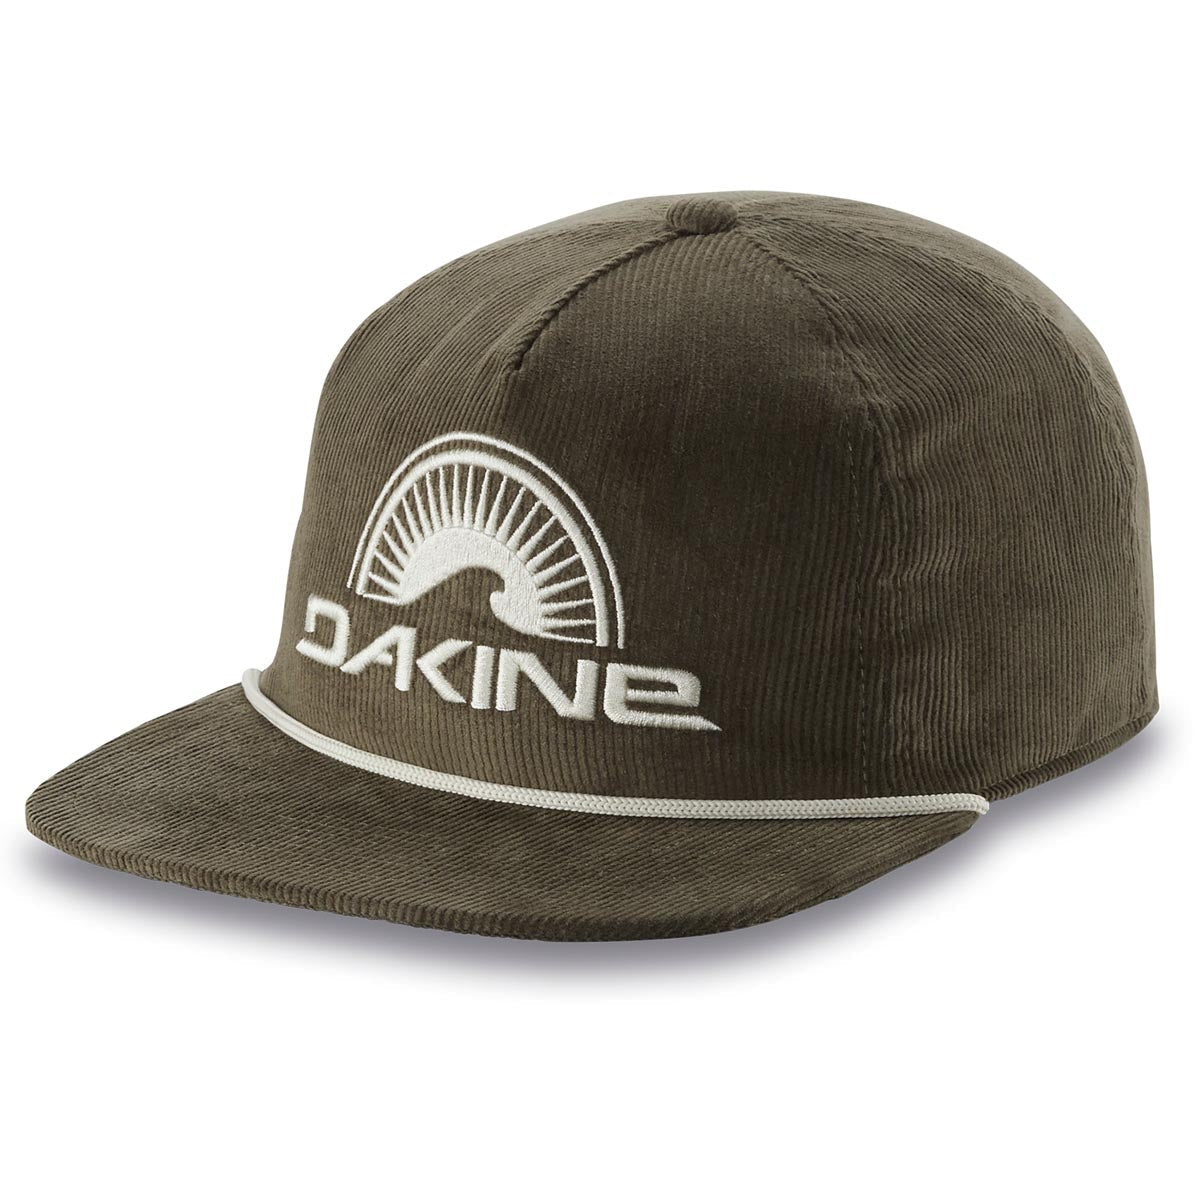 Dakine Tour Unstructured  Hat - Utility Green image 1